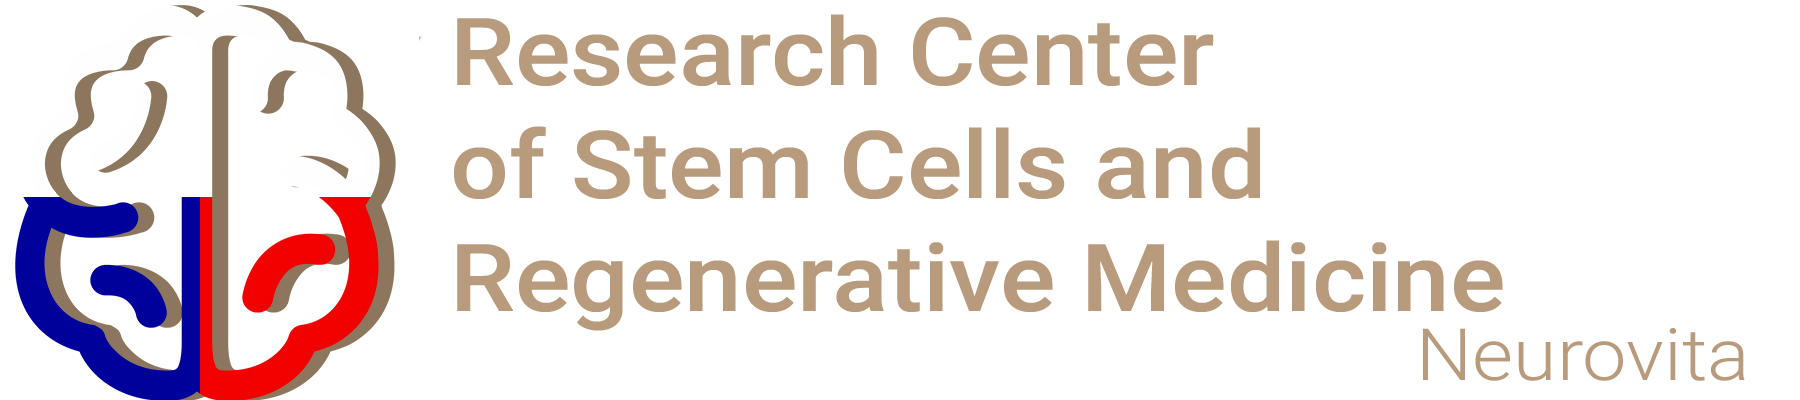 Research Center of Stem Cells and Regenerative Medicine